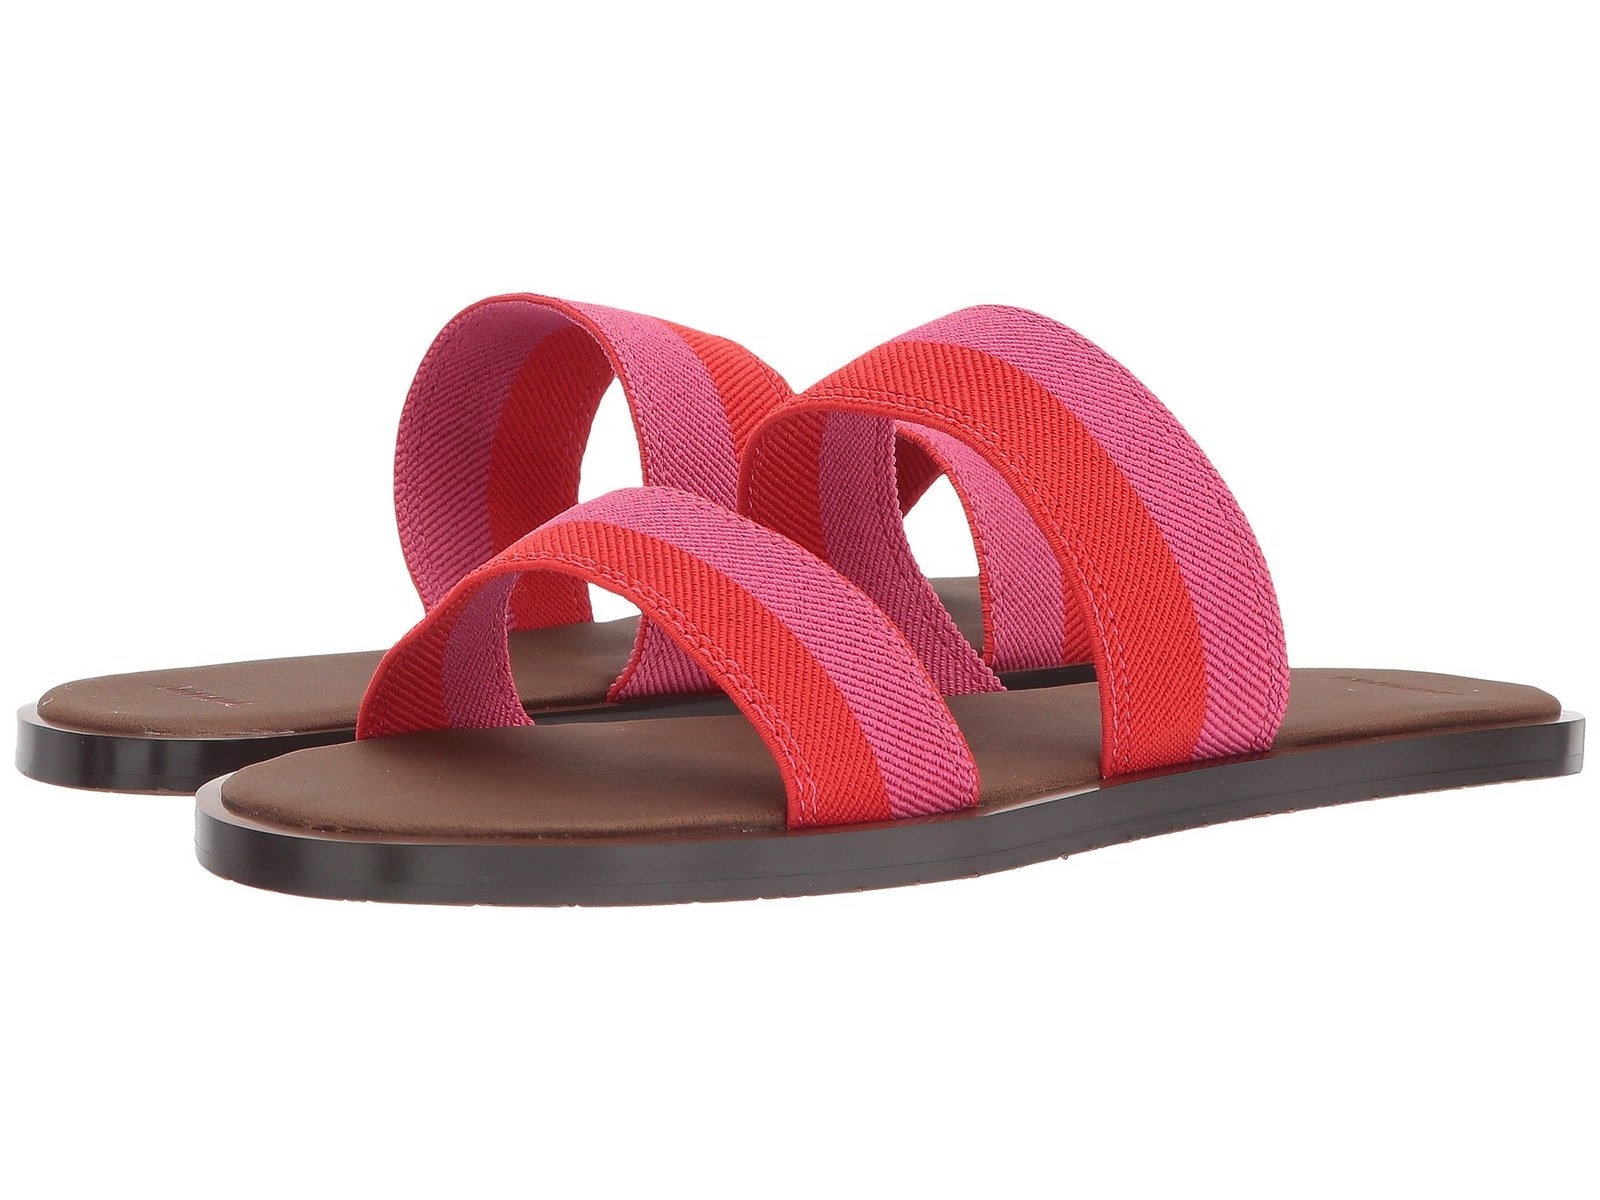 zappos rainbow sandals